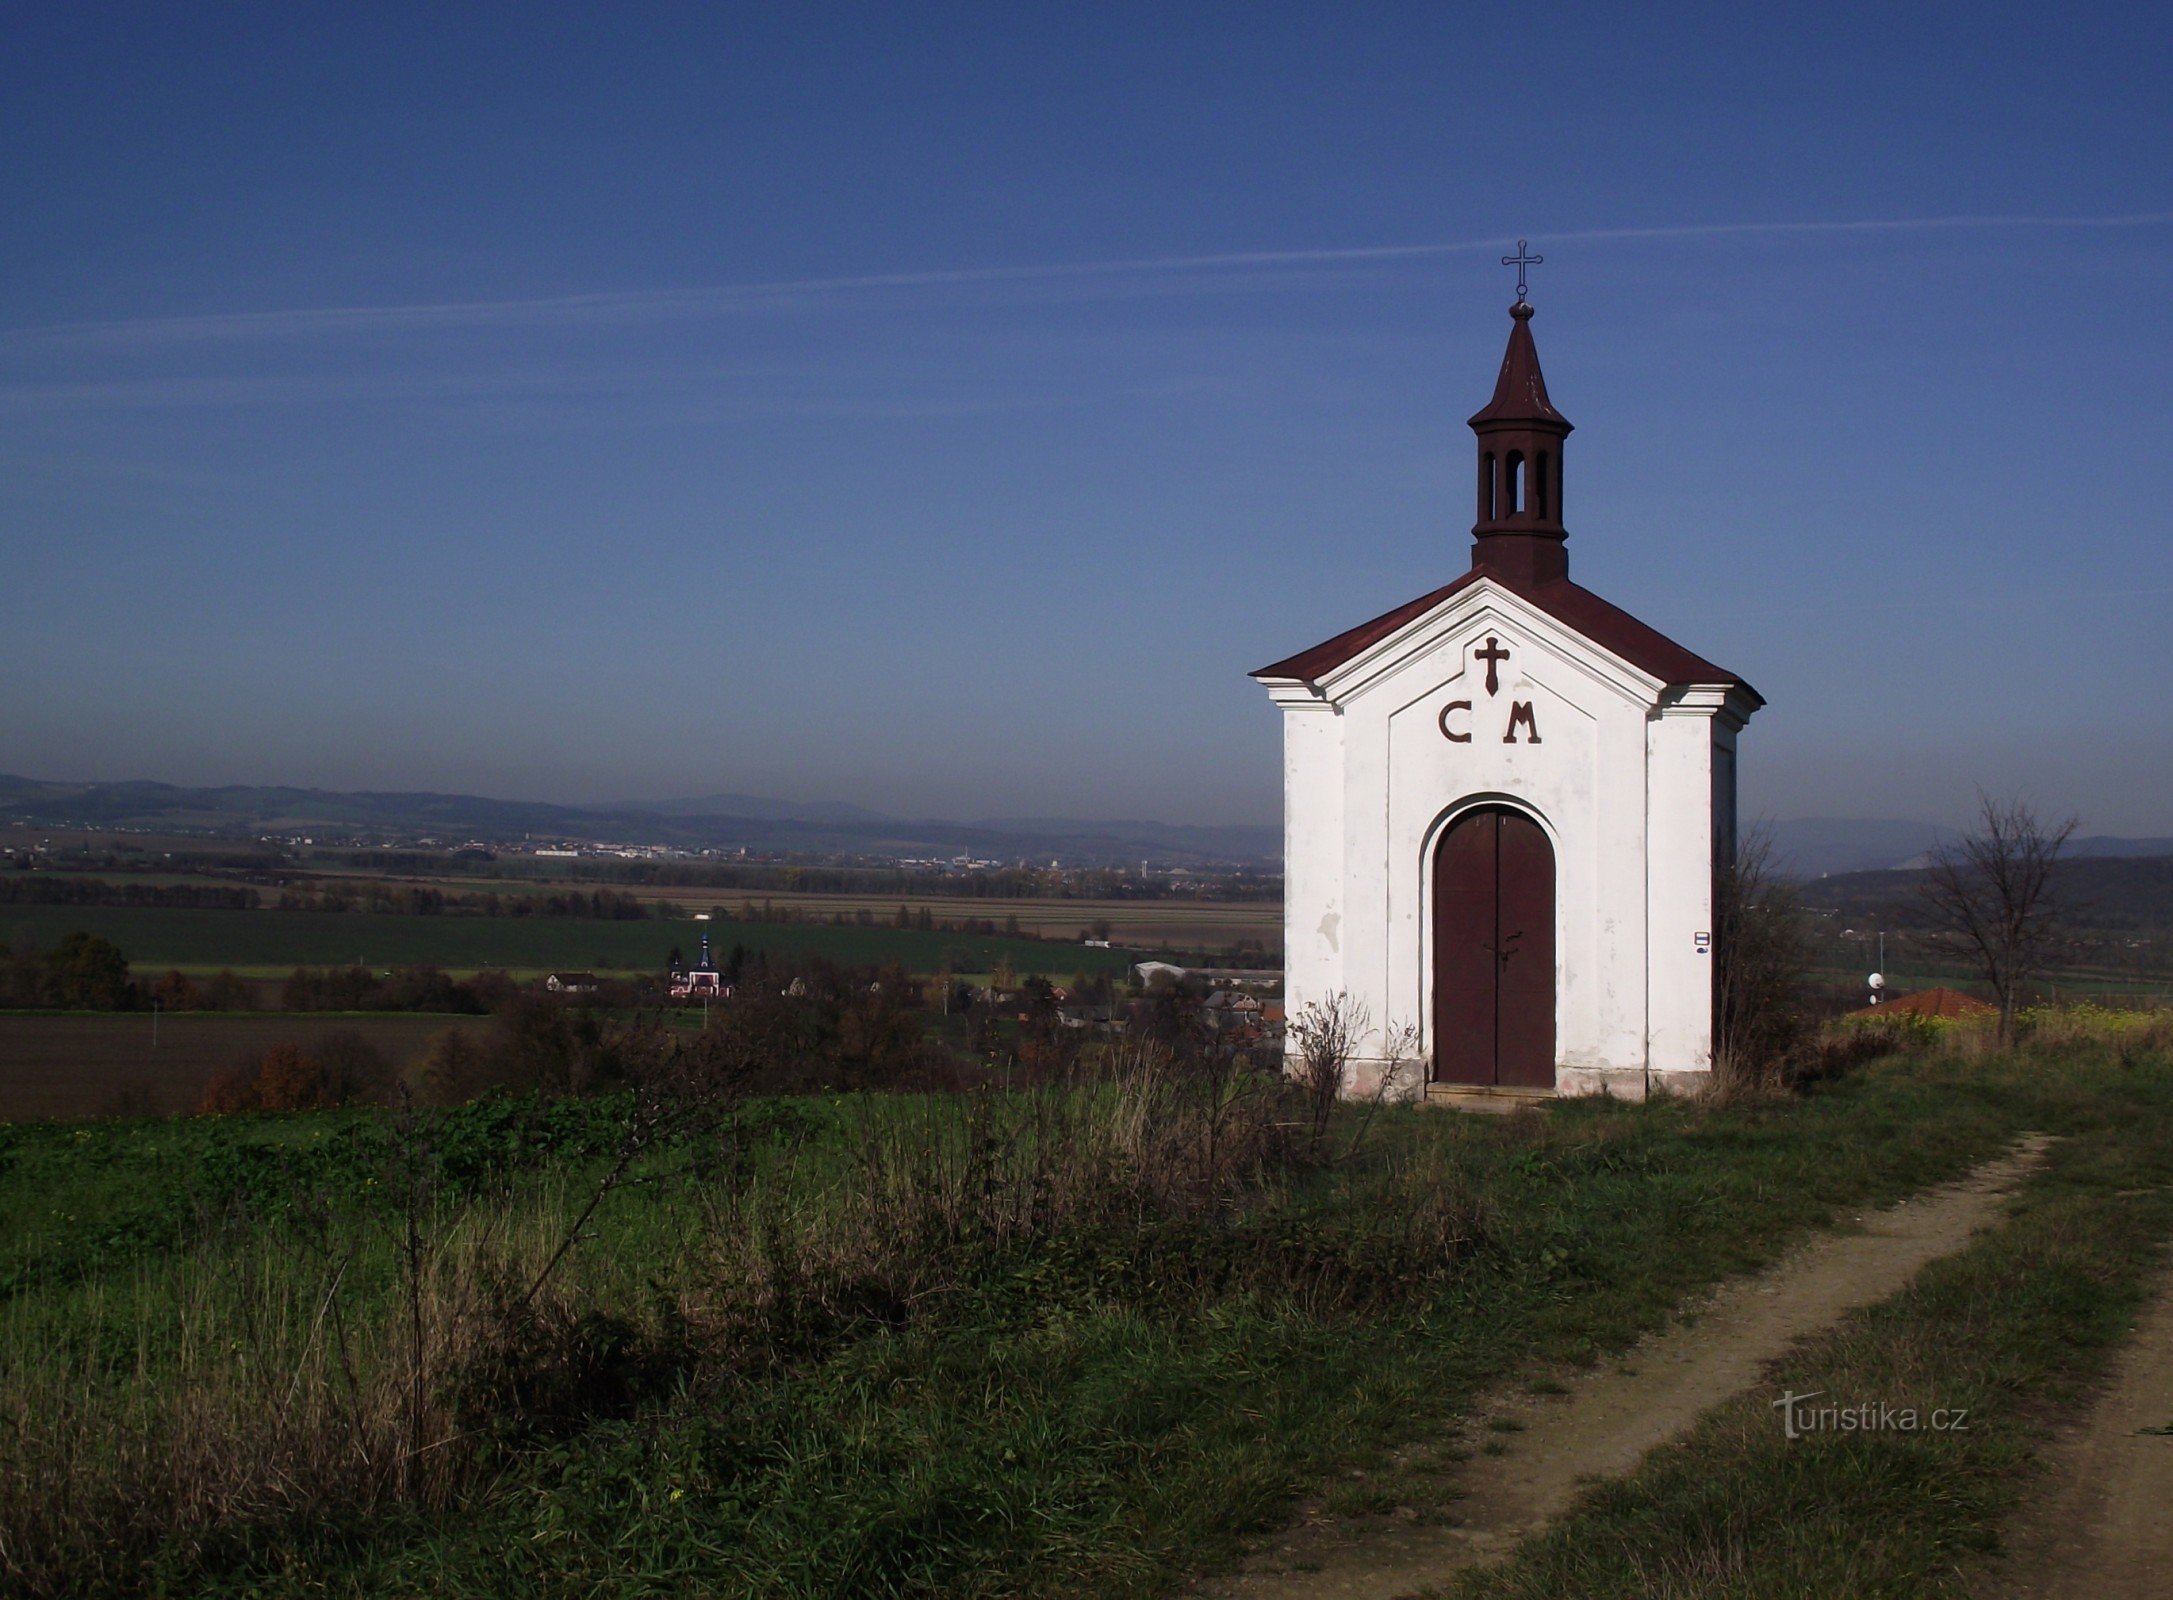 Bílá Lhota – Měník (district OL) – two chapels